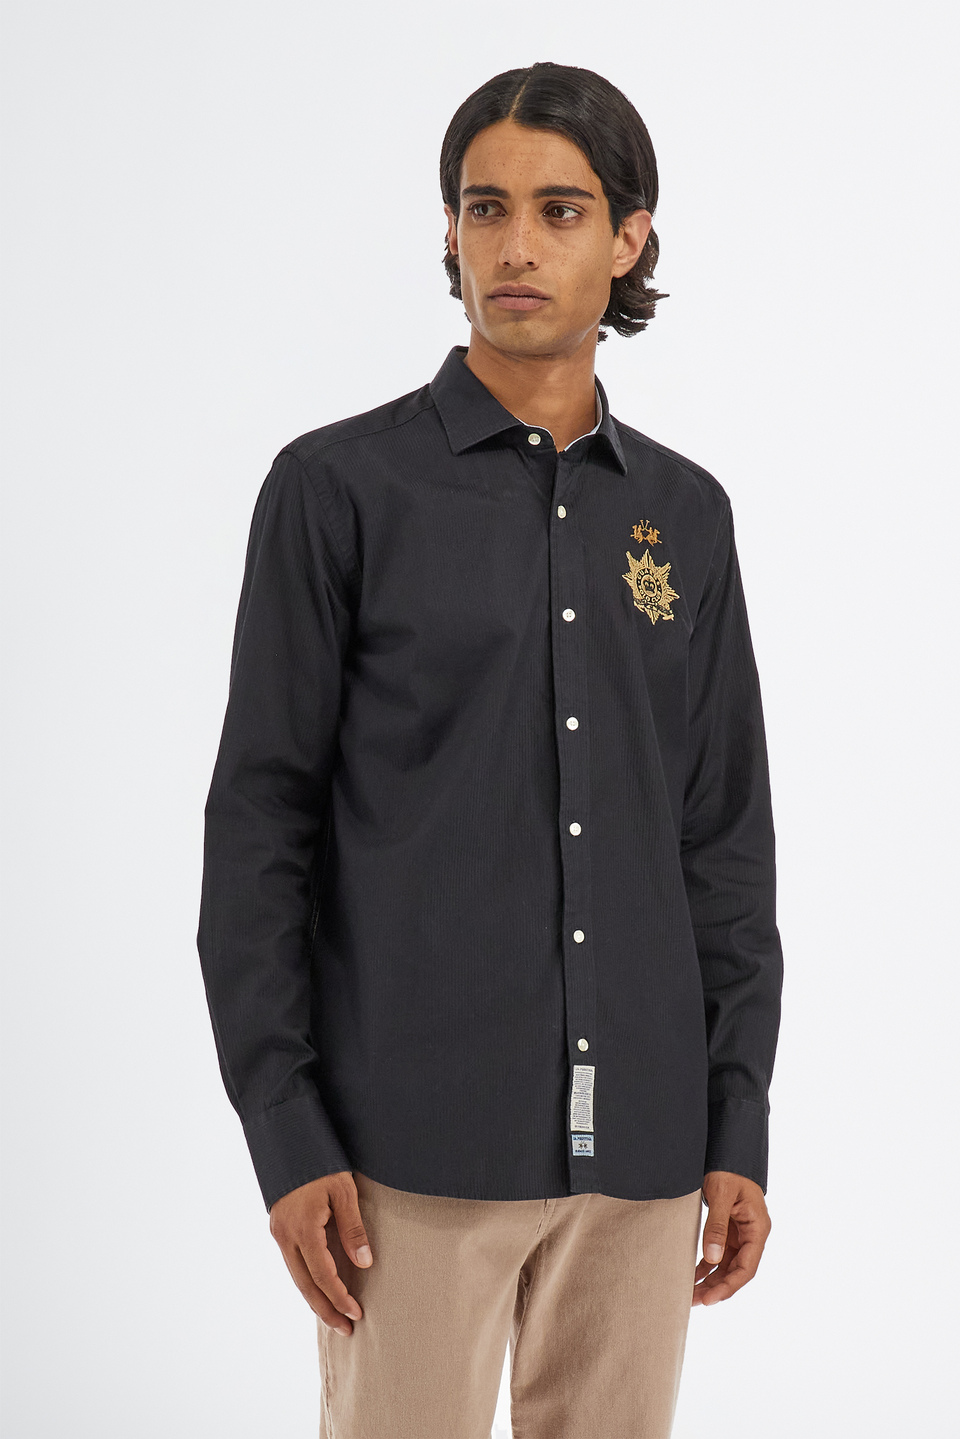 Men’s Guards regular fit cotton long sleeves shirt | La Martina - Official Online Shop